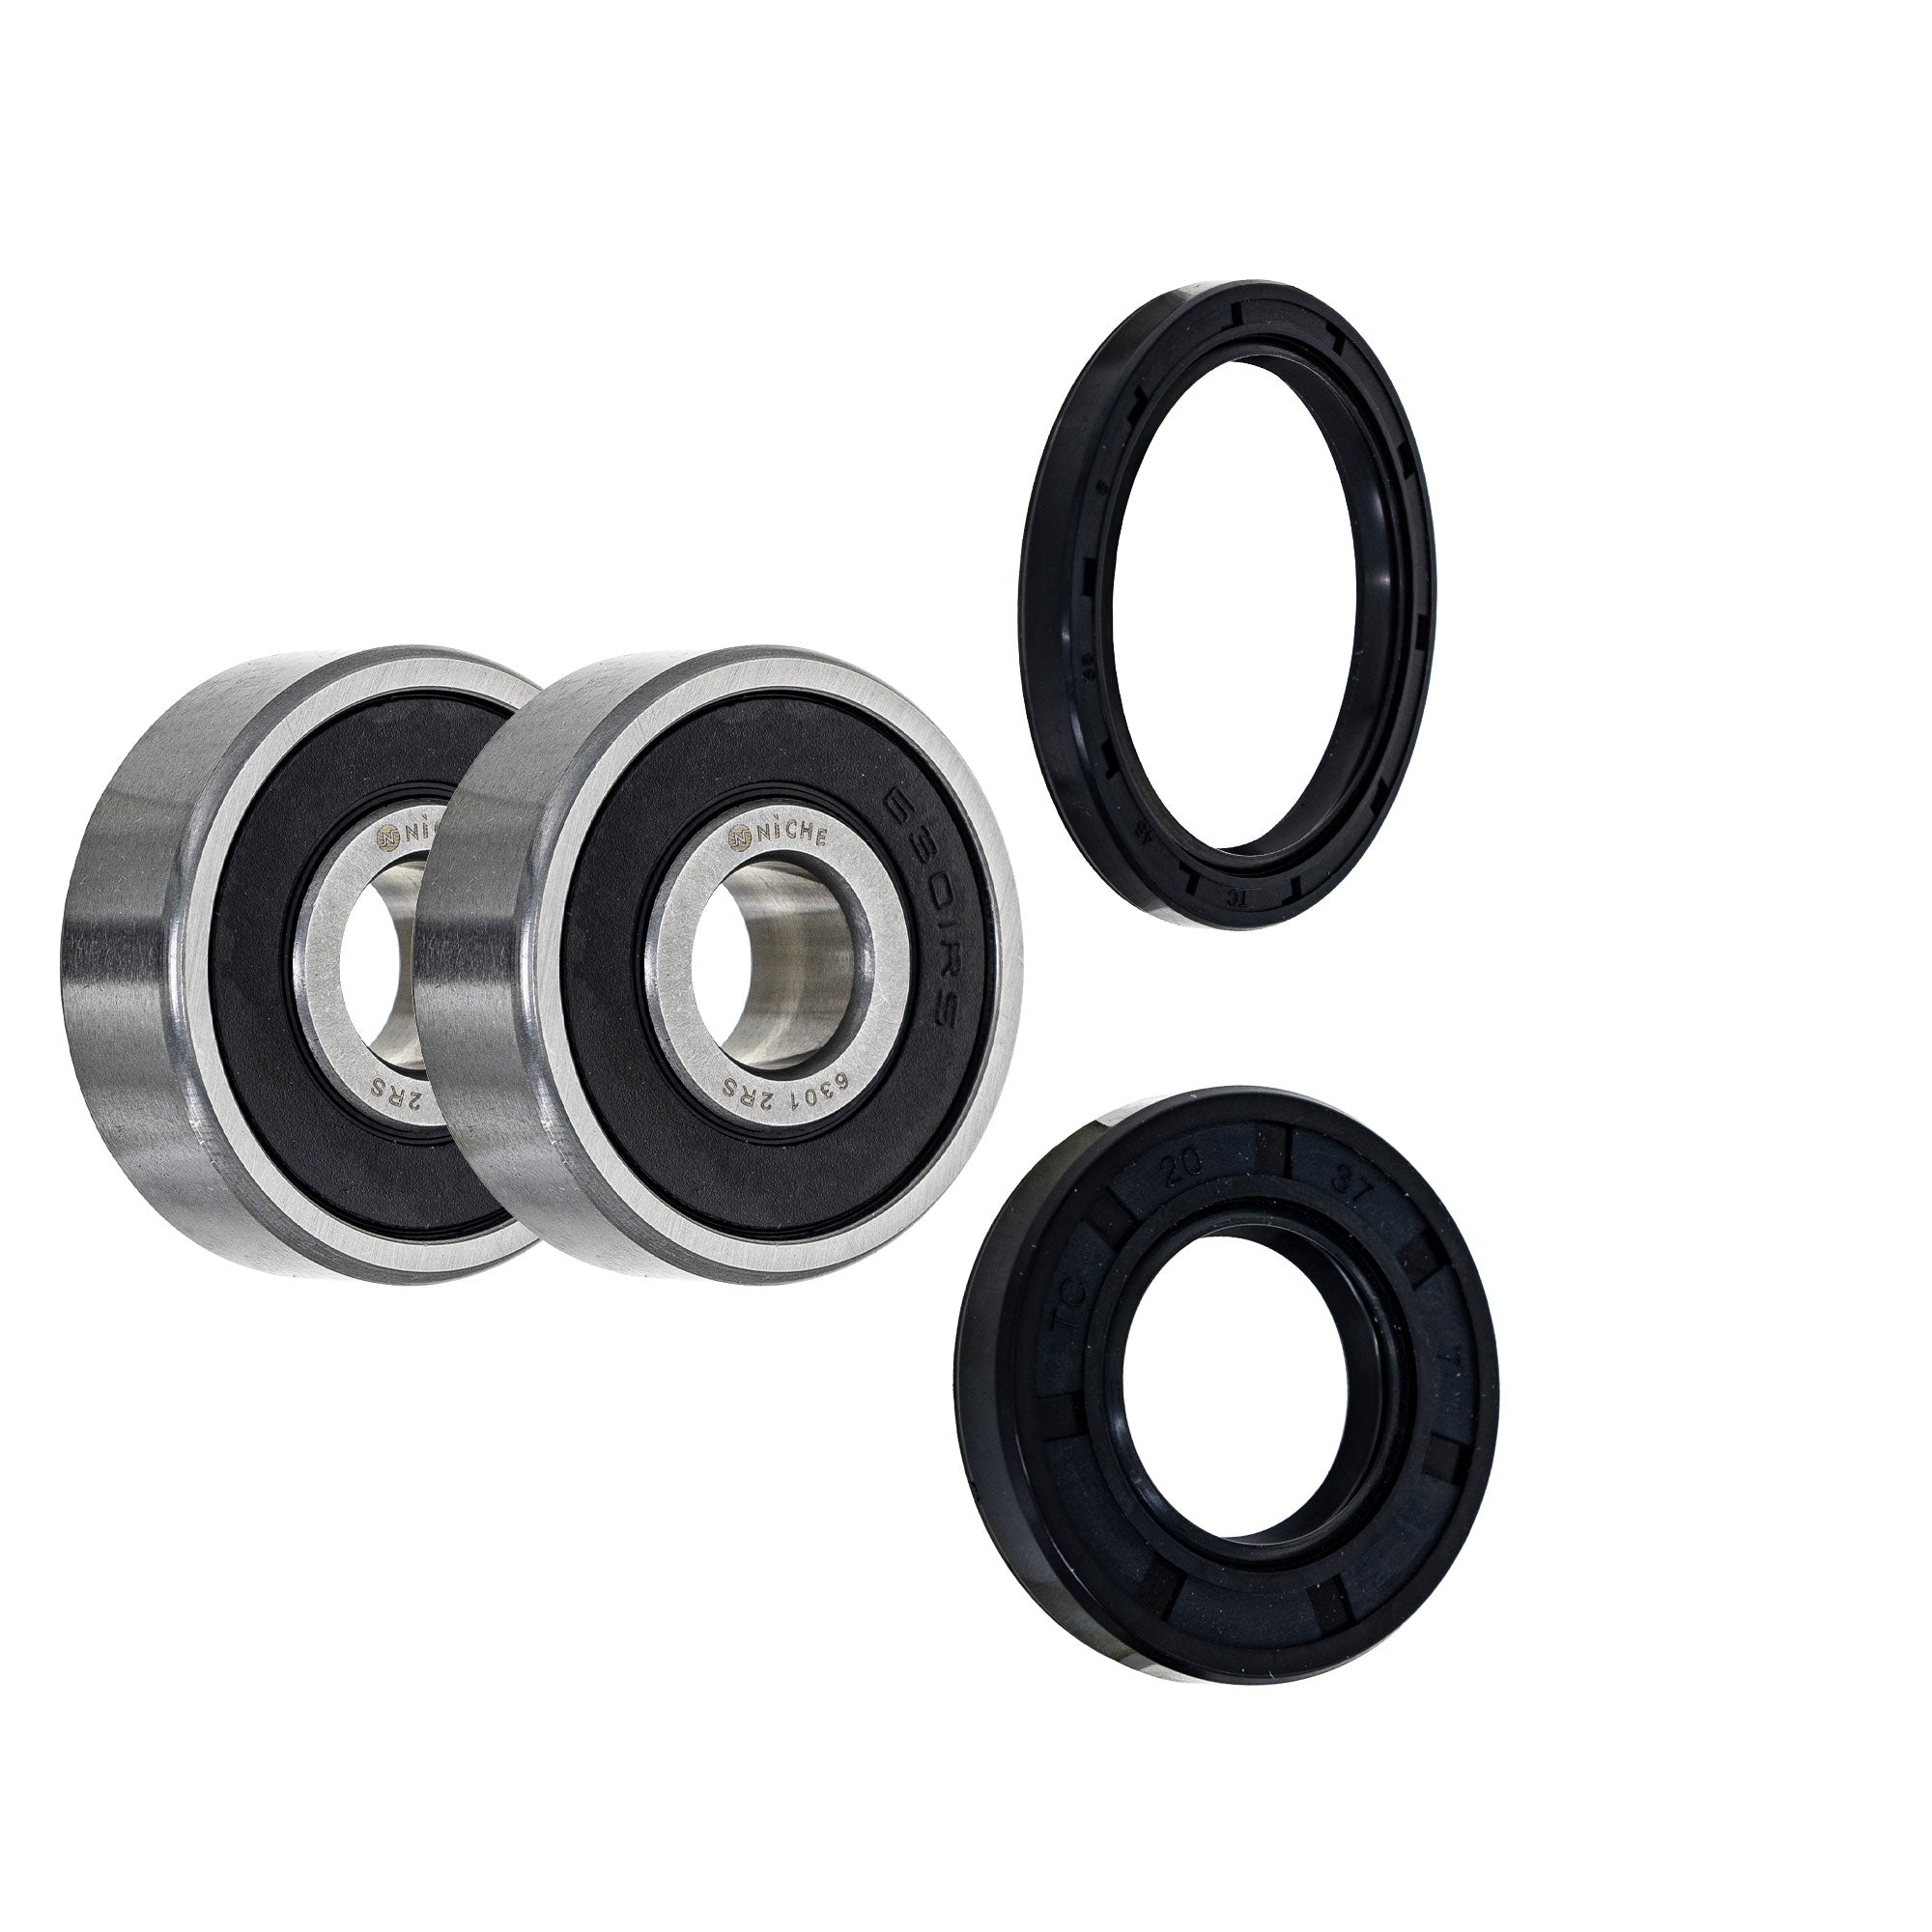 Wheel Bearing Seal Kit for zOTHER RZ350 NICHE MK1009044